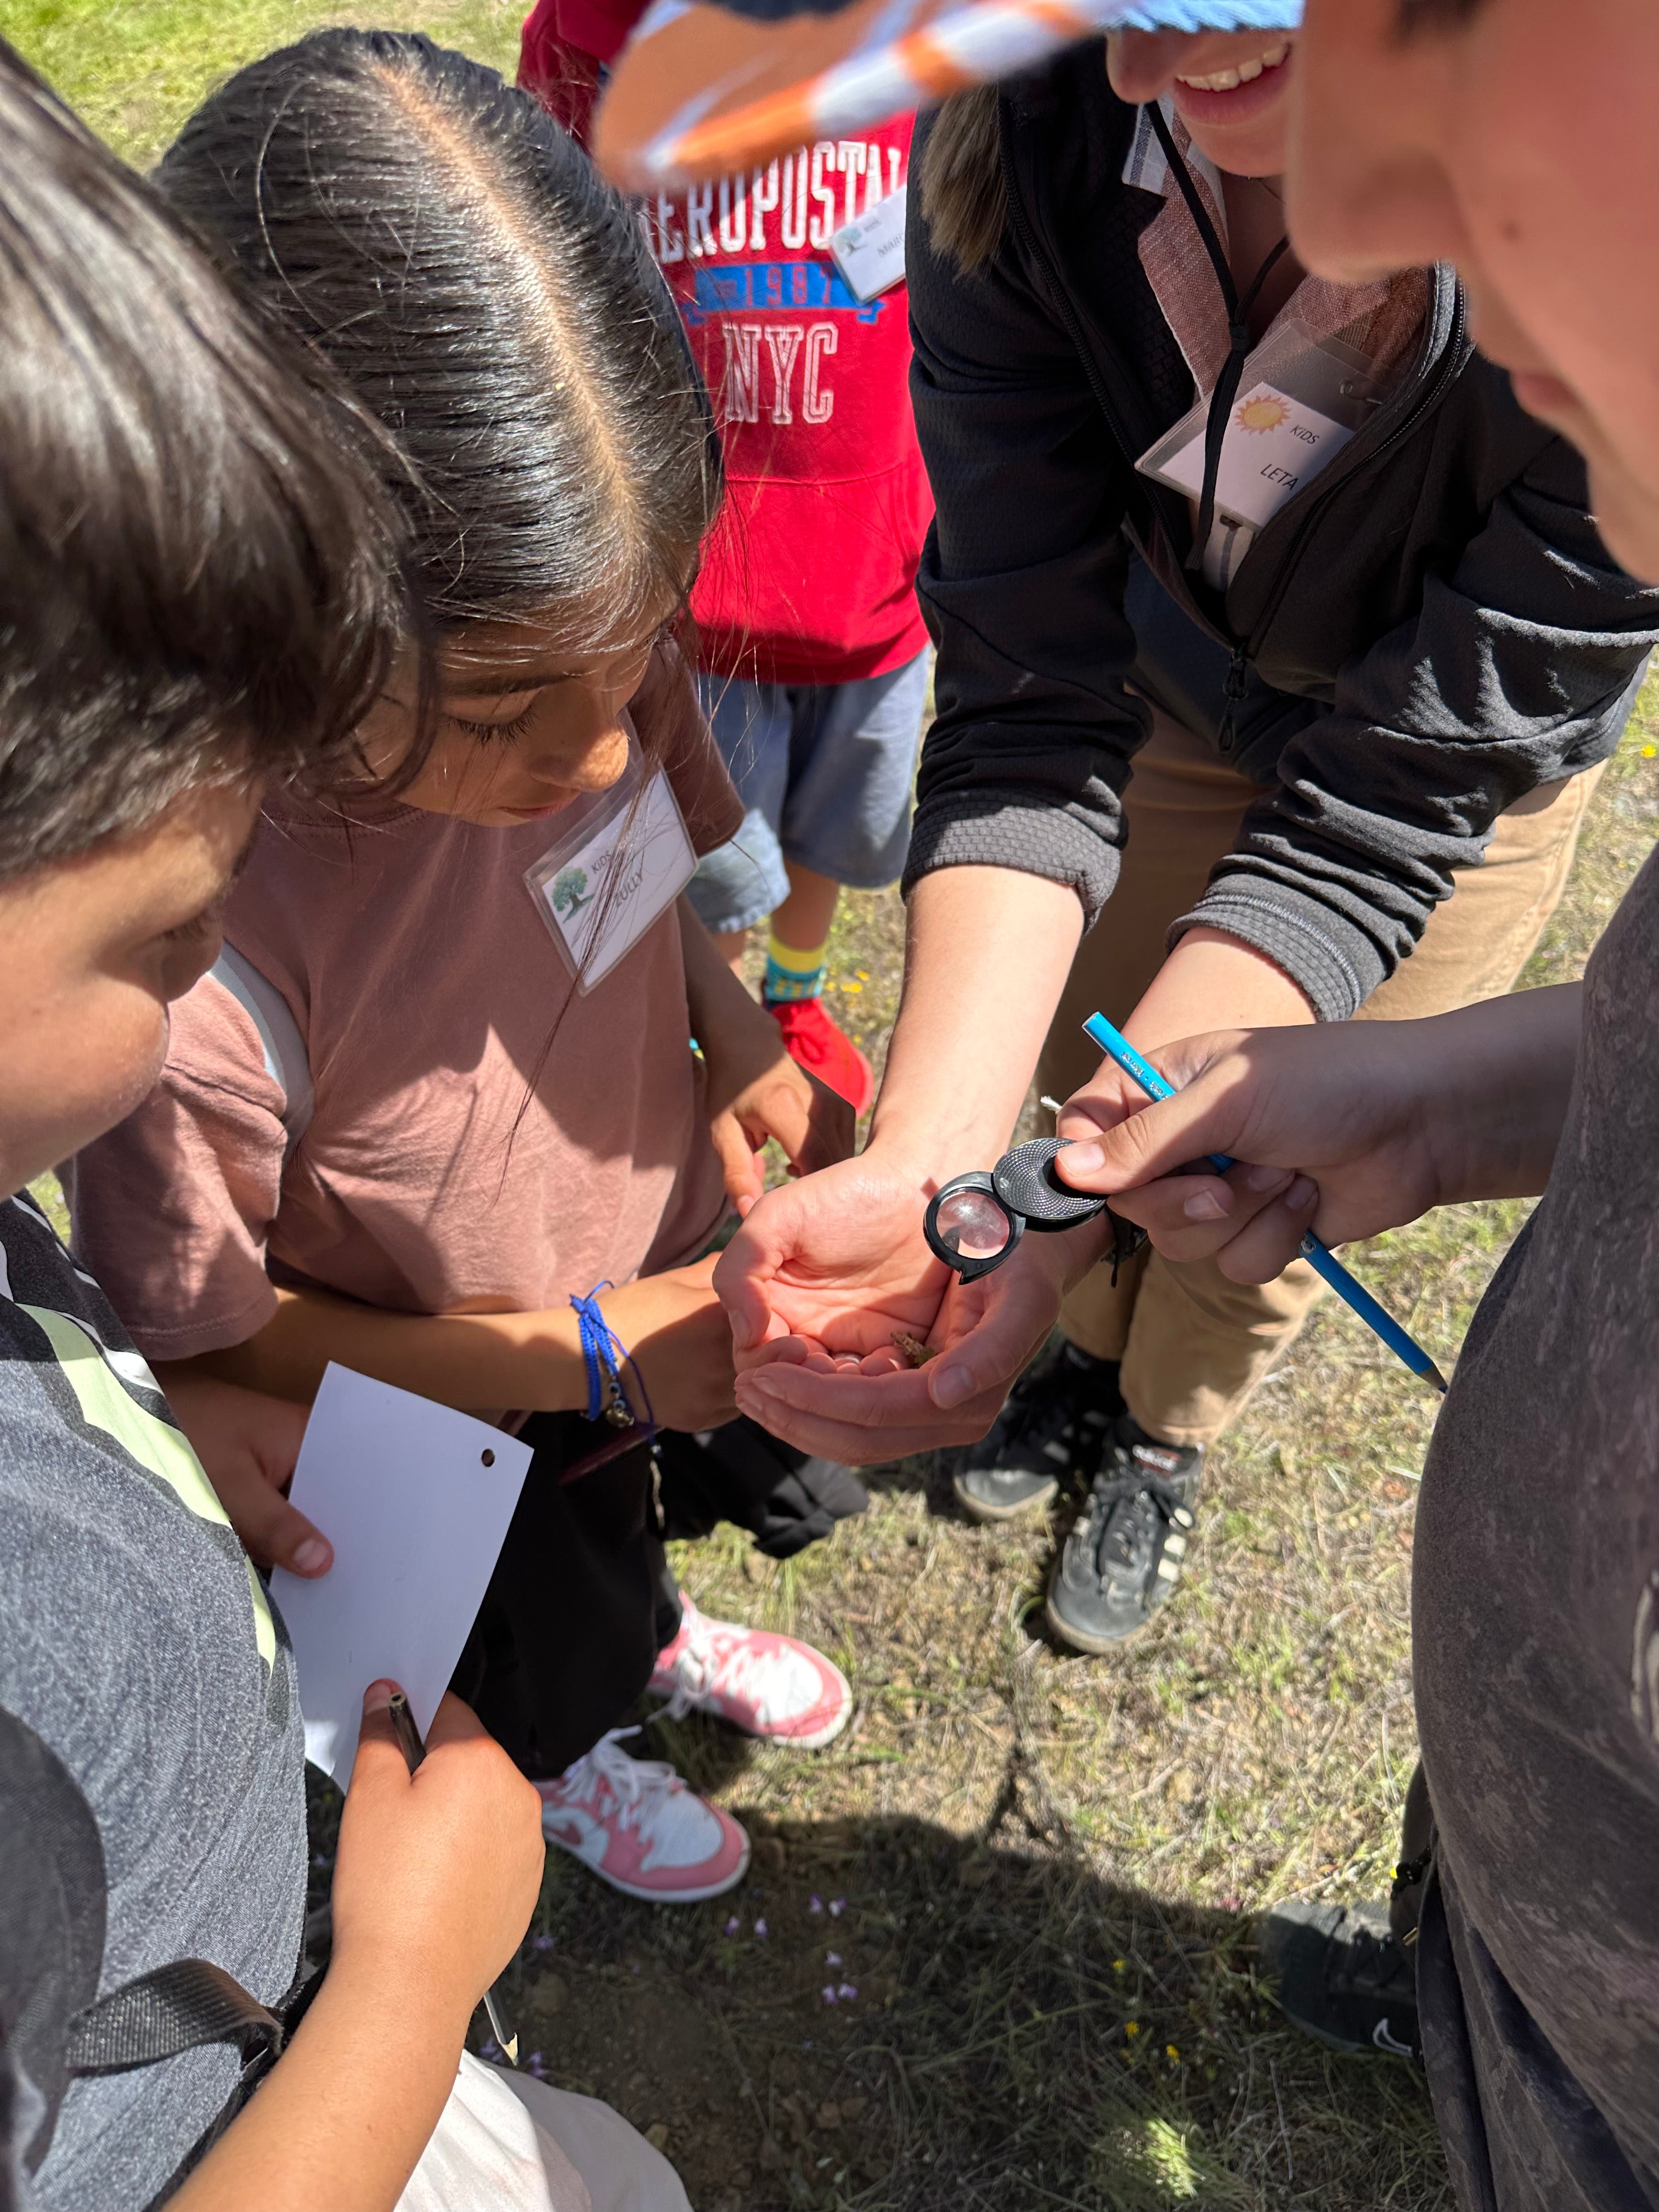 Students examine a bug through a hand lens